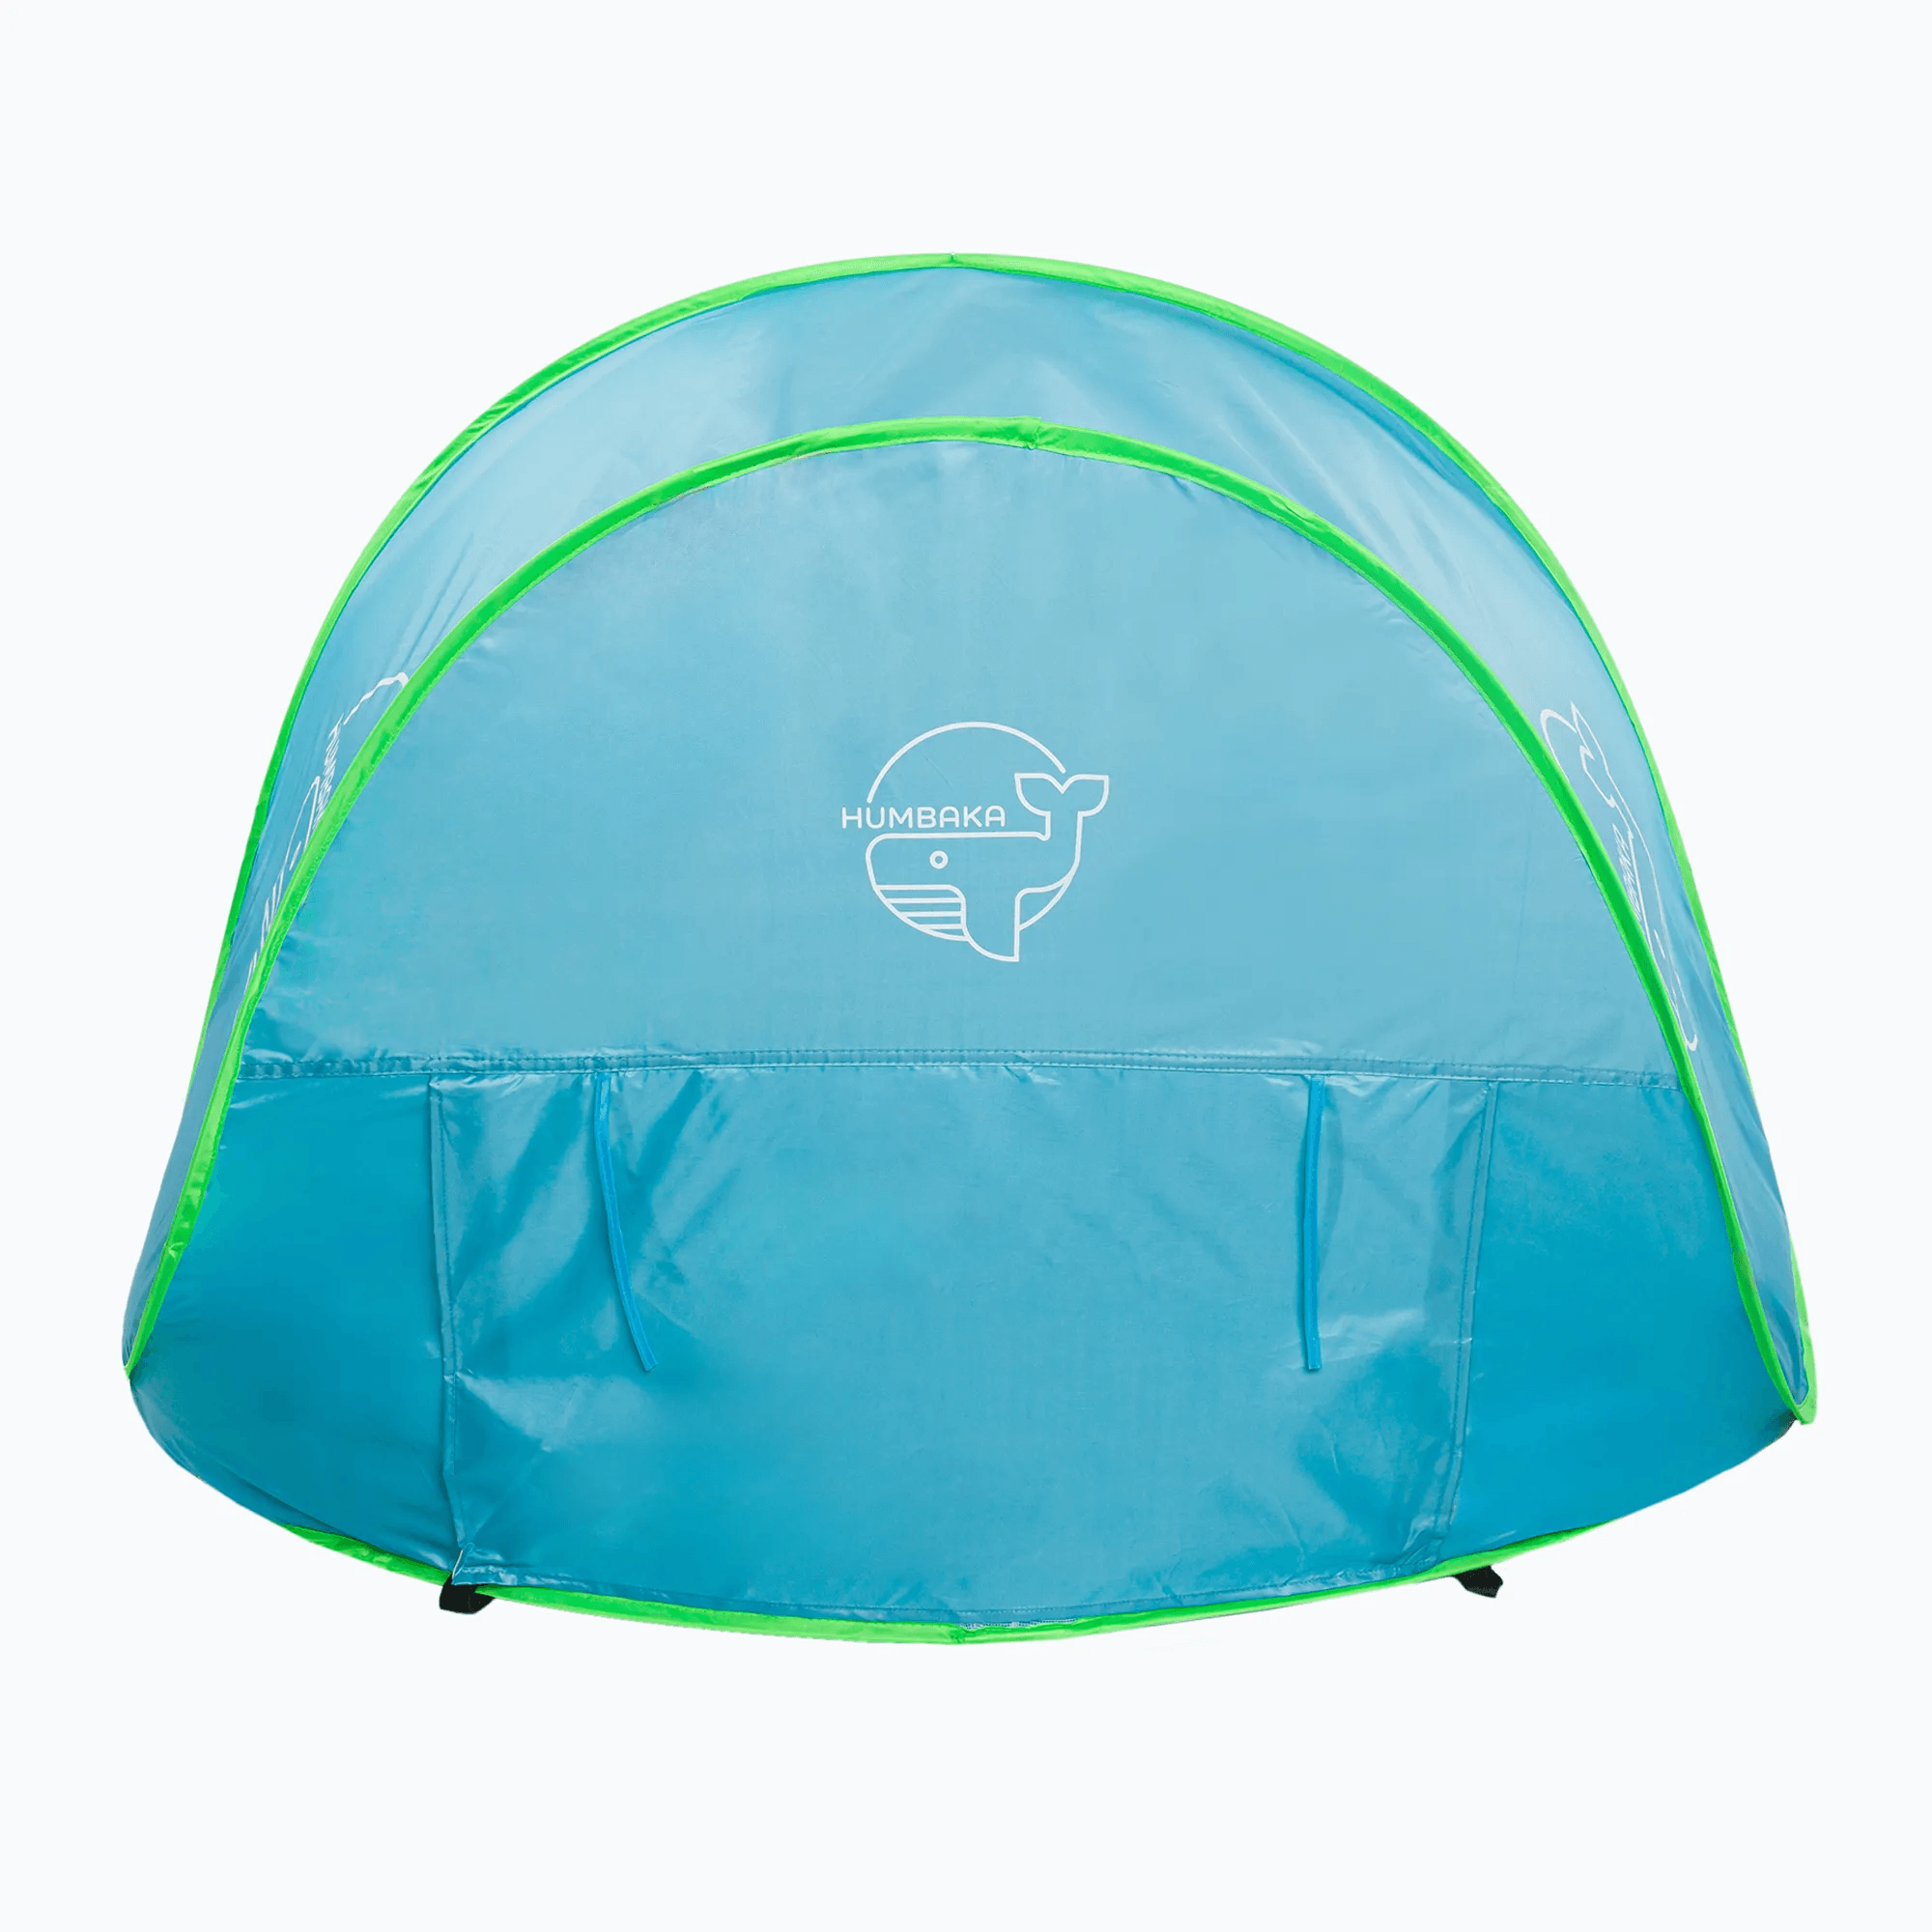 Humbaka: Blue beach tent with pool